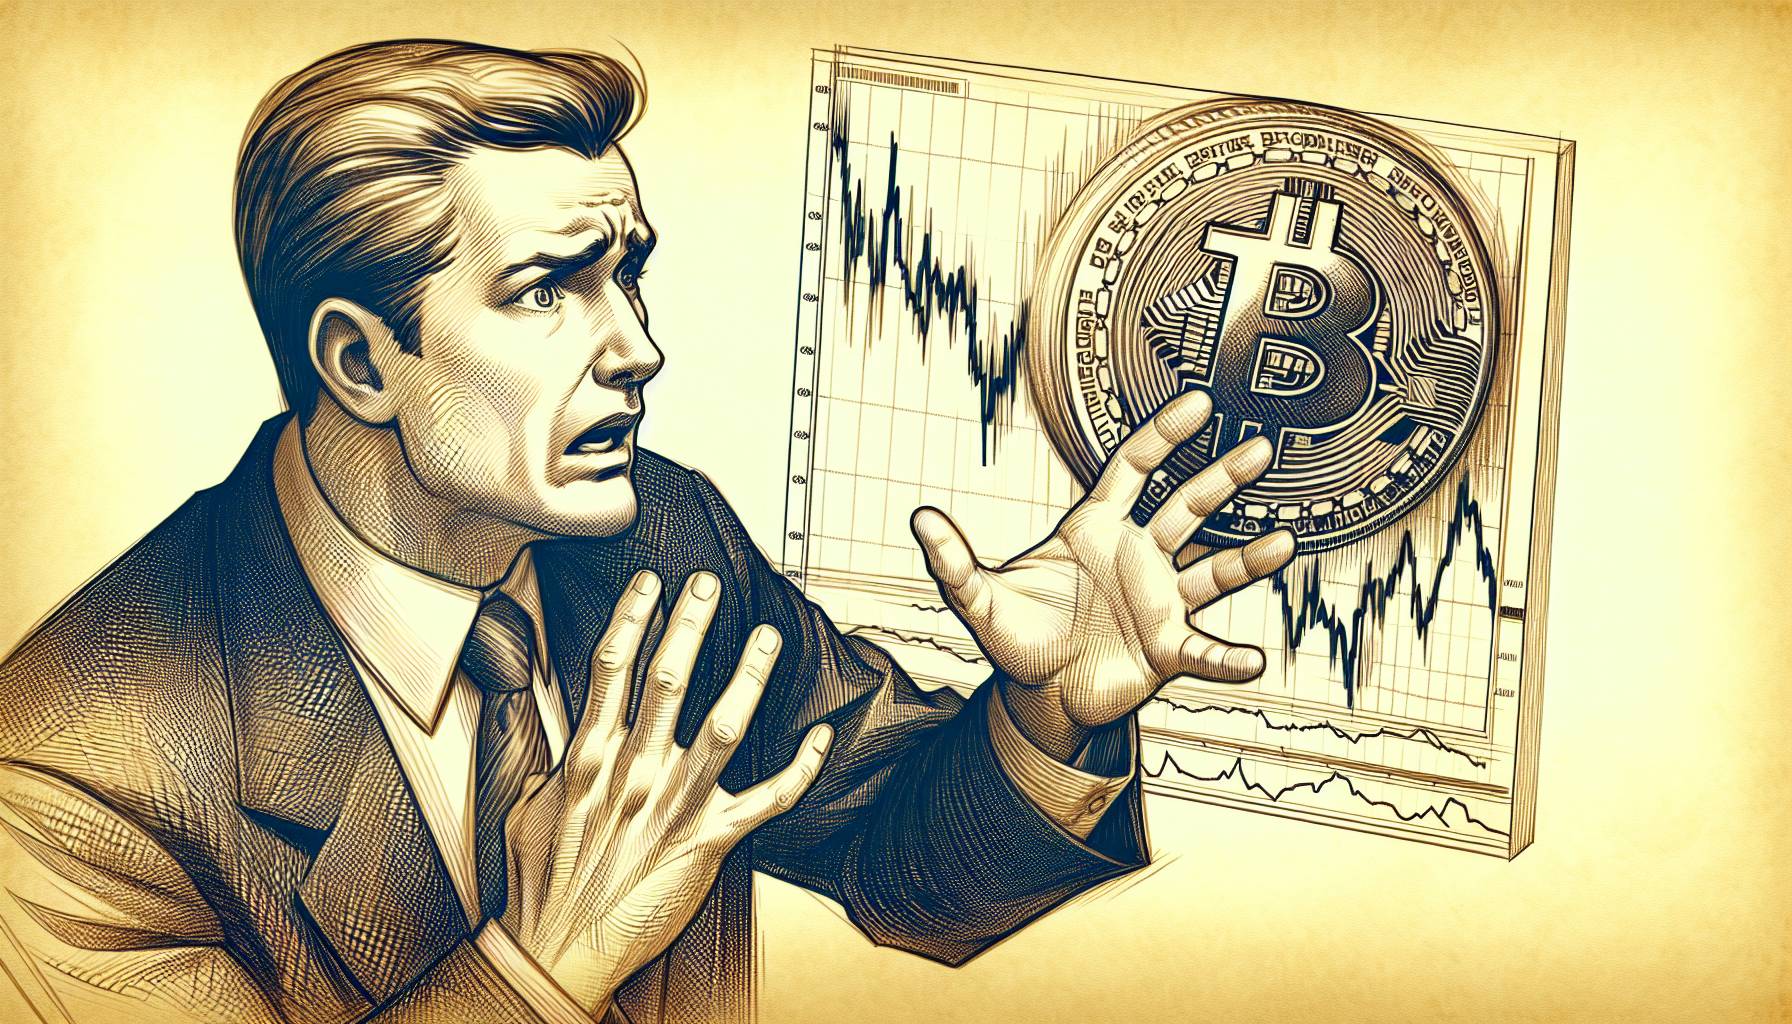 "Bitcoin Investment Risks"